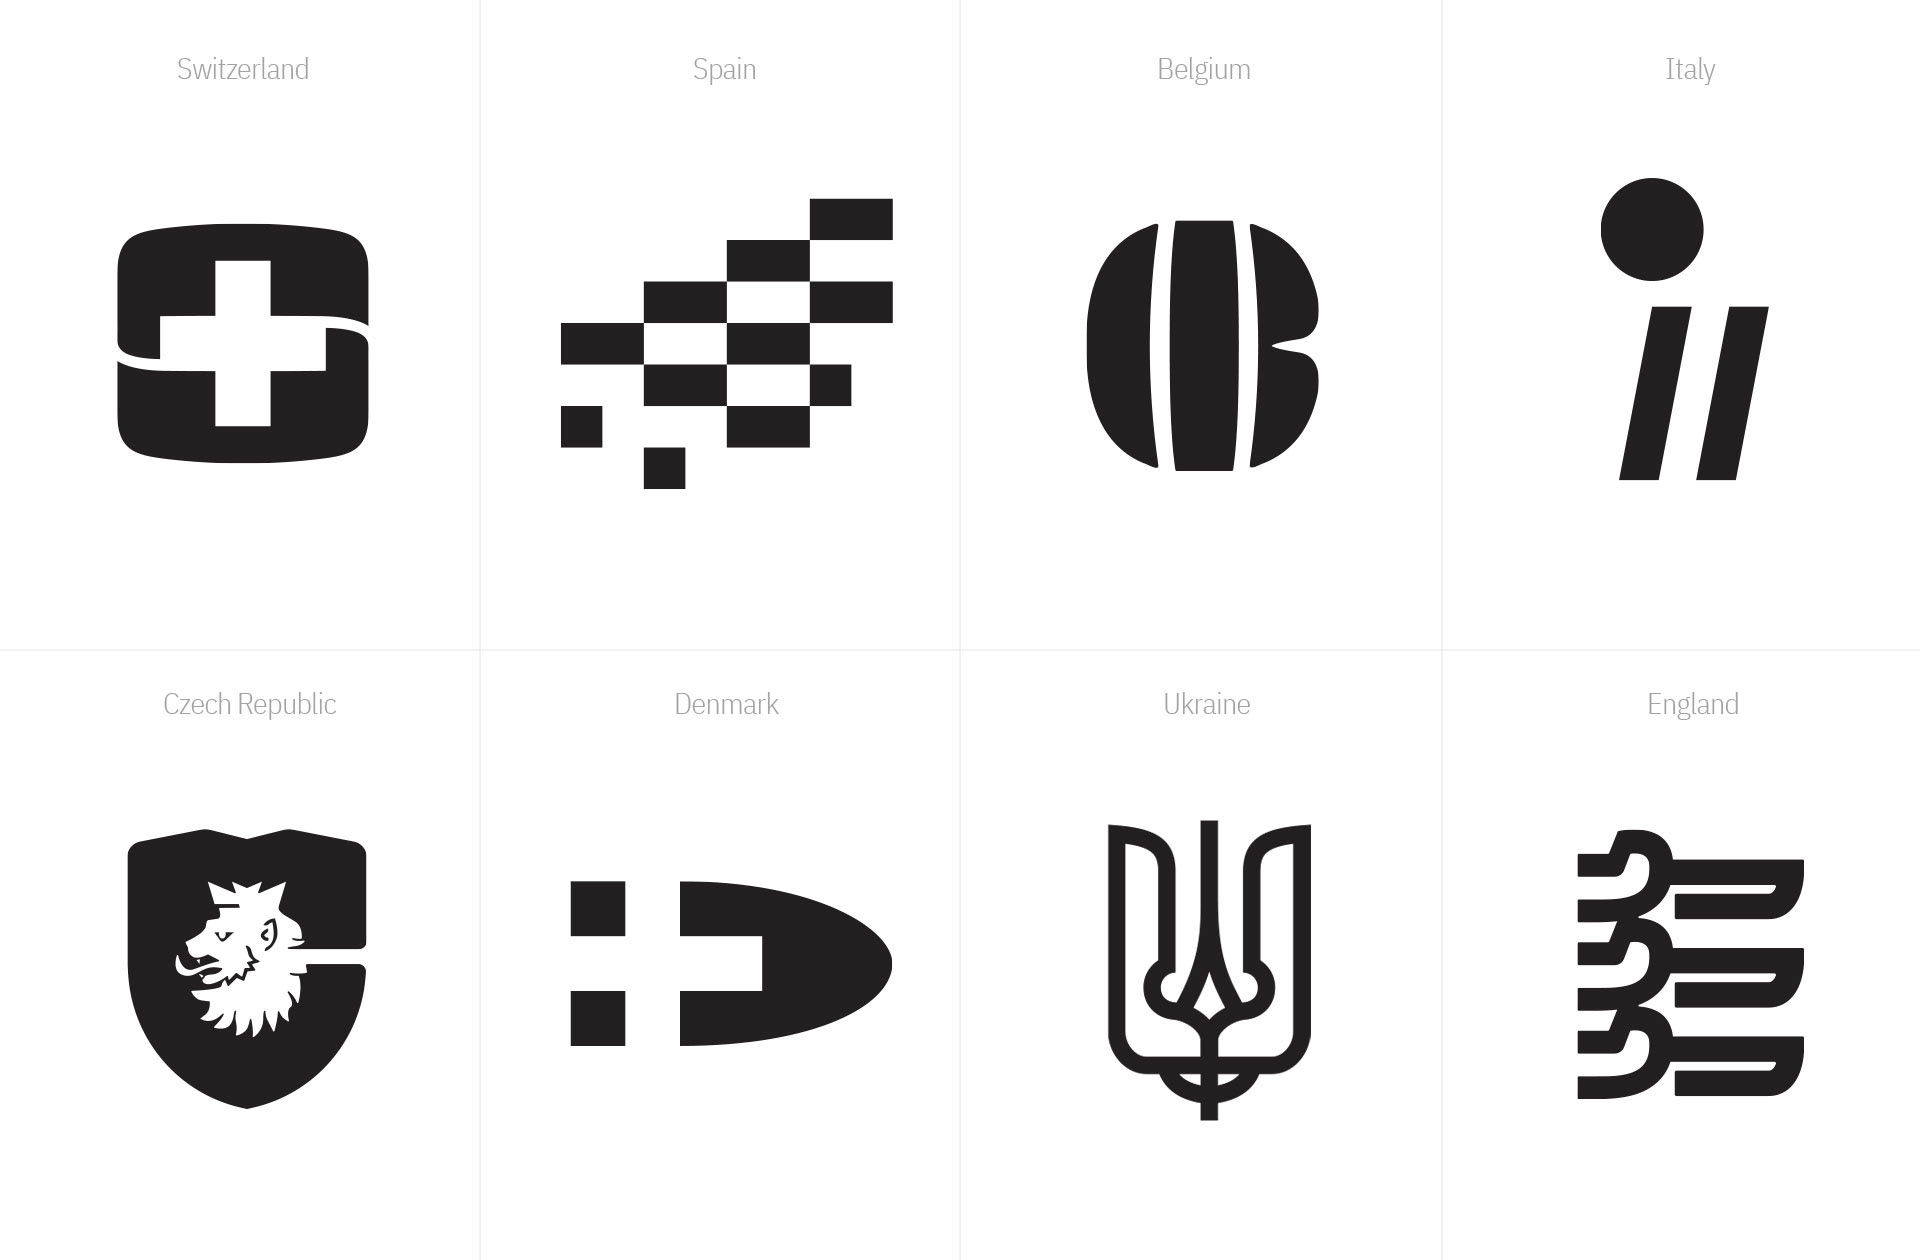 Euro 2020 Team Logos in Corporate Styles